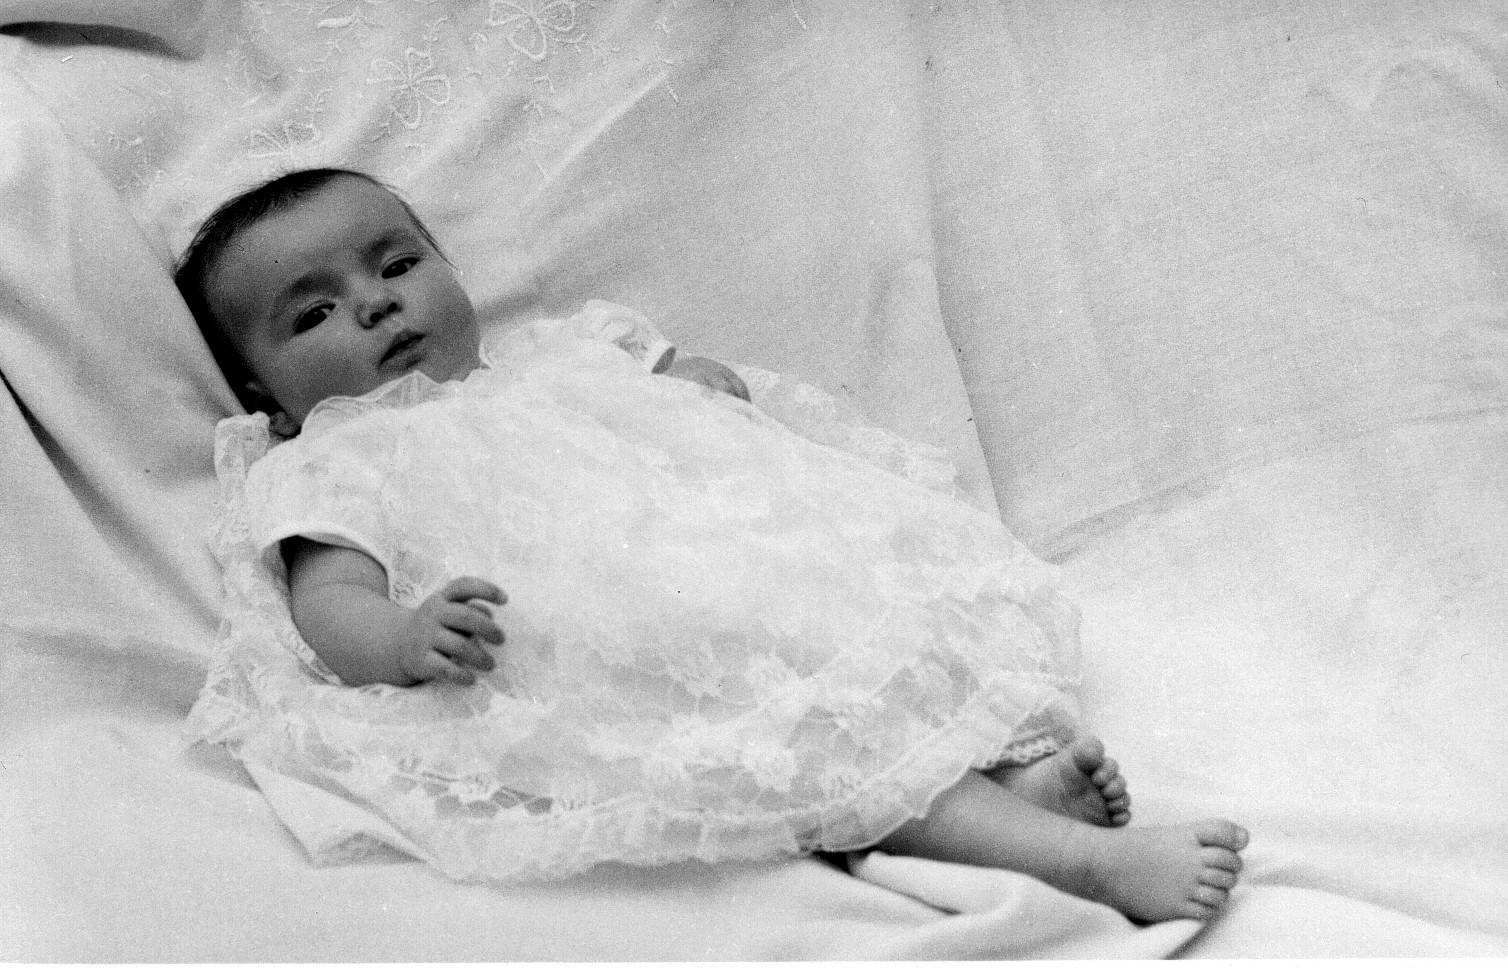 Yvette Rowland as a baby